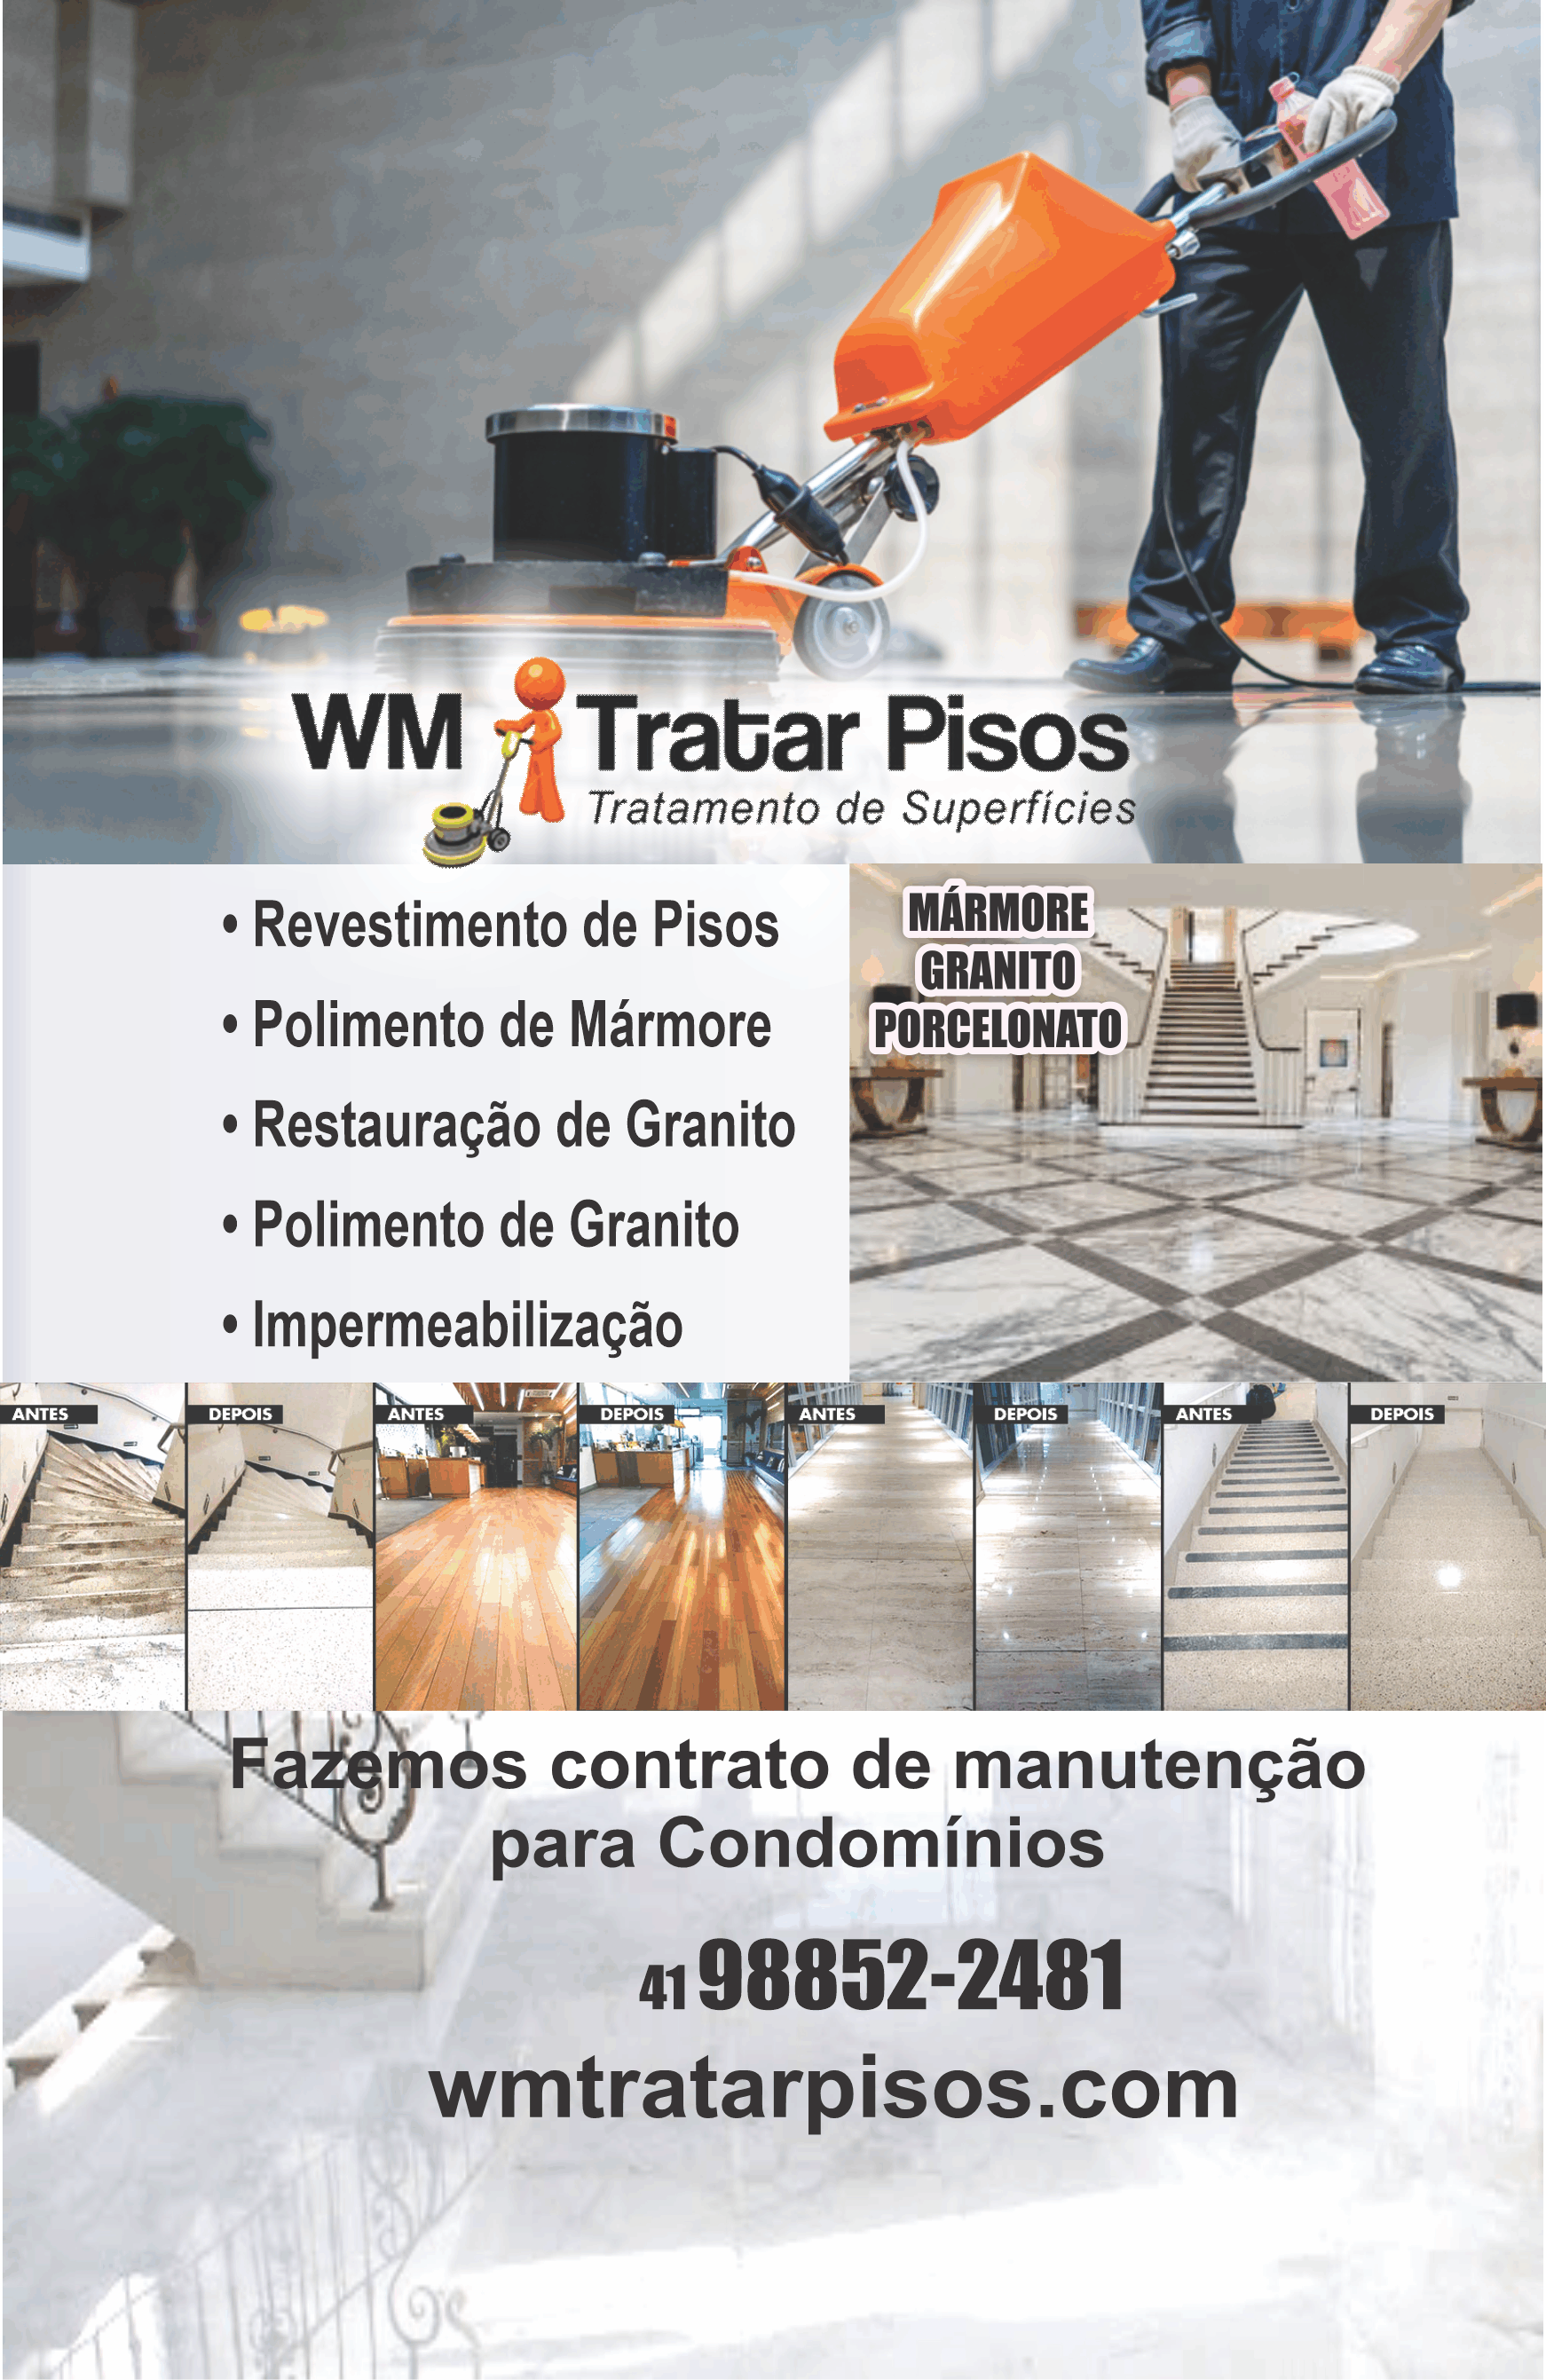  WM Tratar Pisos      RUA PAULO MASS, 480, CURITIBA - PR  Fones: (41) 98852-2481 /